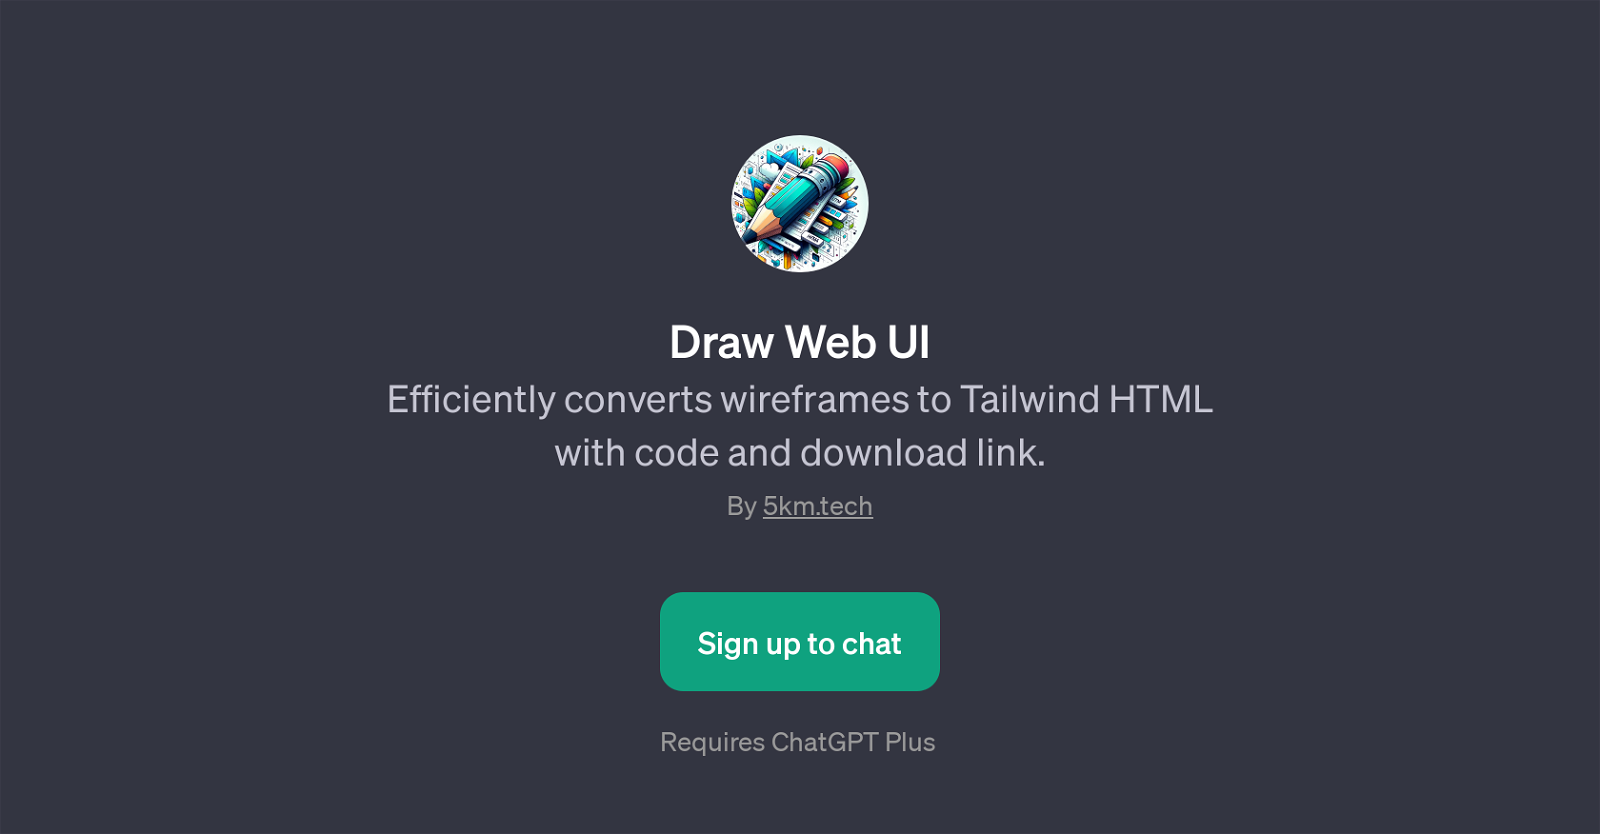 Draw Web UI website